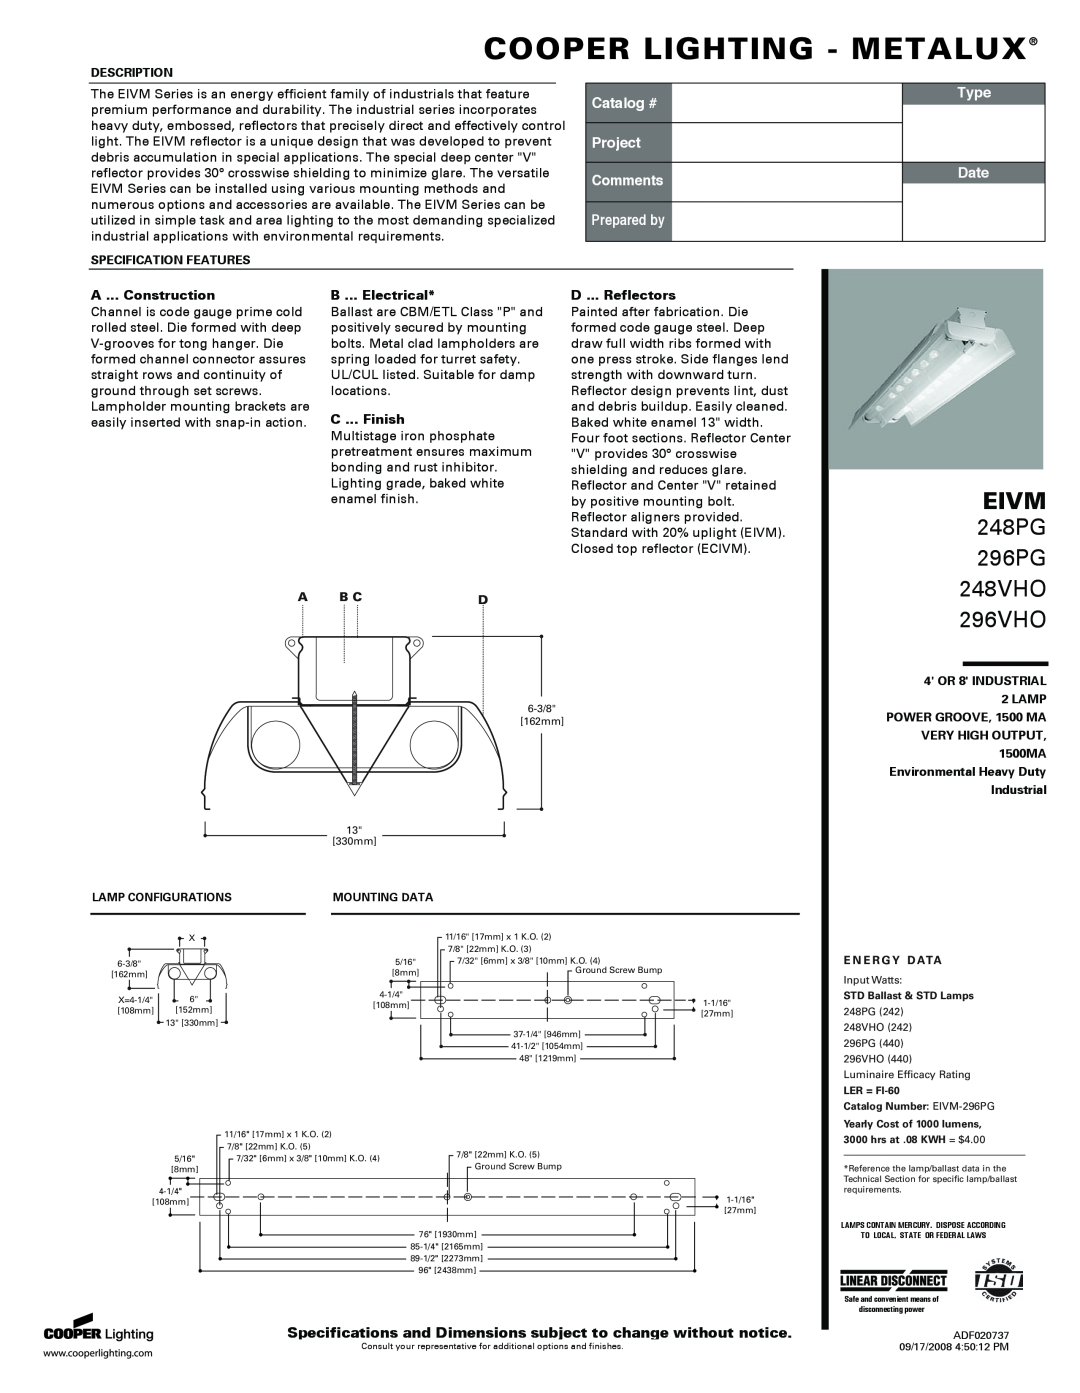 Cooper Lighting specifications Cooper Lighting - Metalux, Eivm, 248PG 296PG, 248VHO 296VHO, Catalog #, Project Comments 